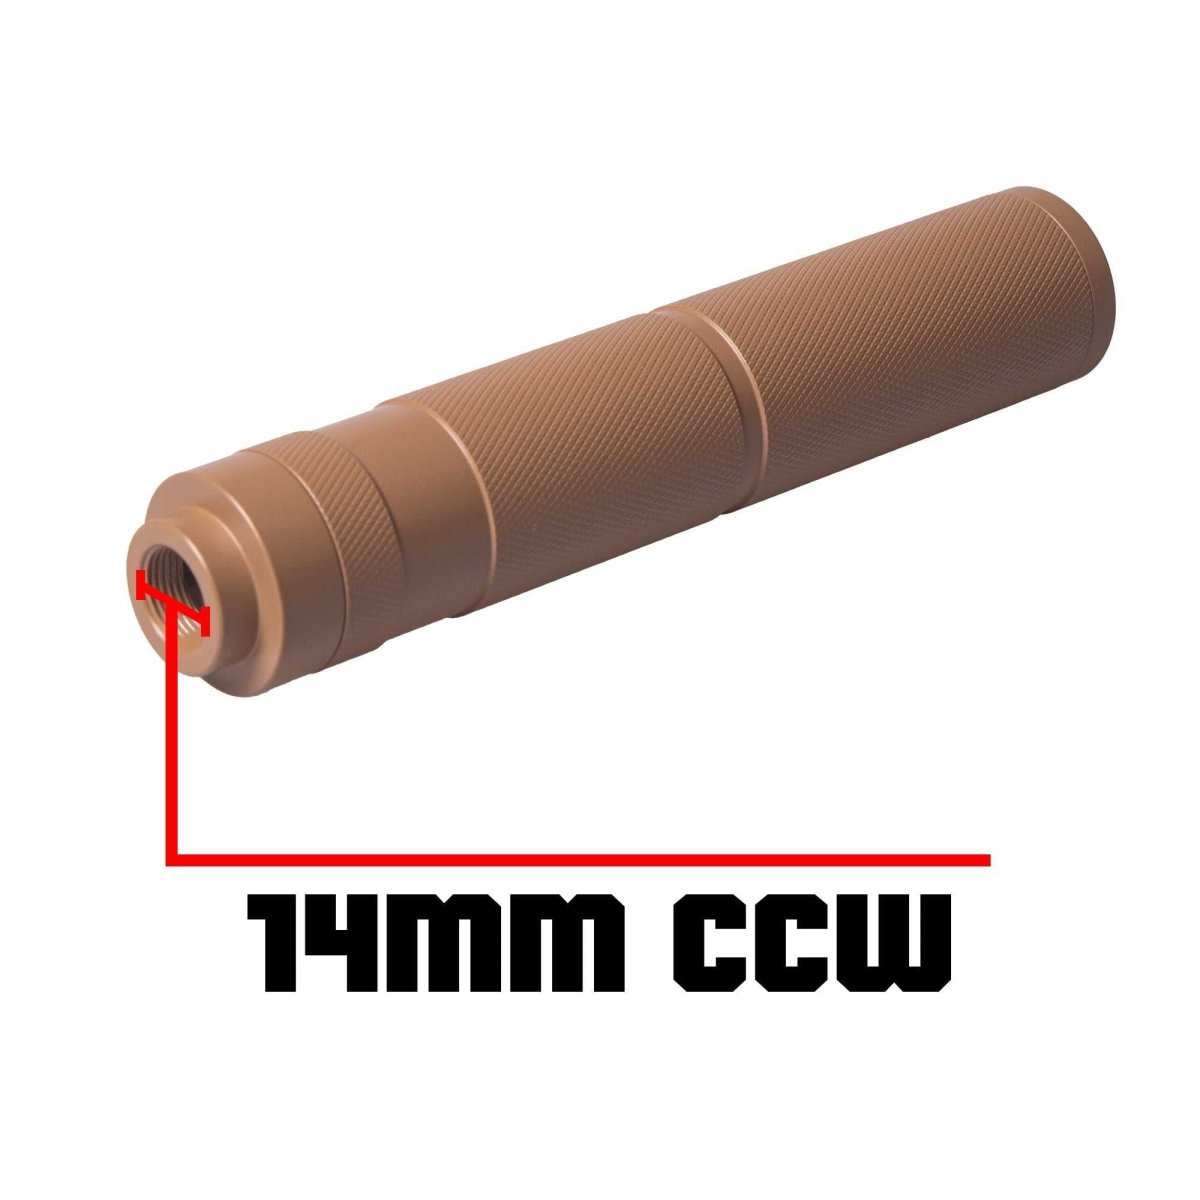 EMERBU Metal KSC Silencer(Tan) - 14mm CCW - EmerbutoysEmerbutoys